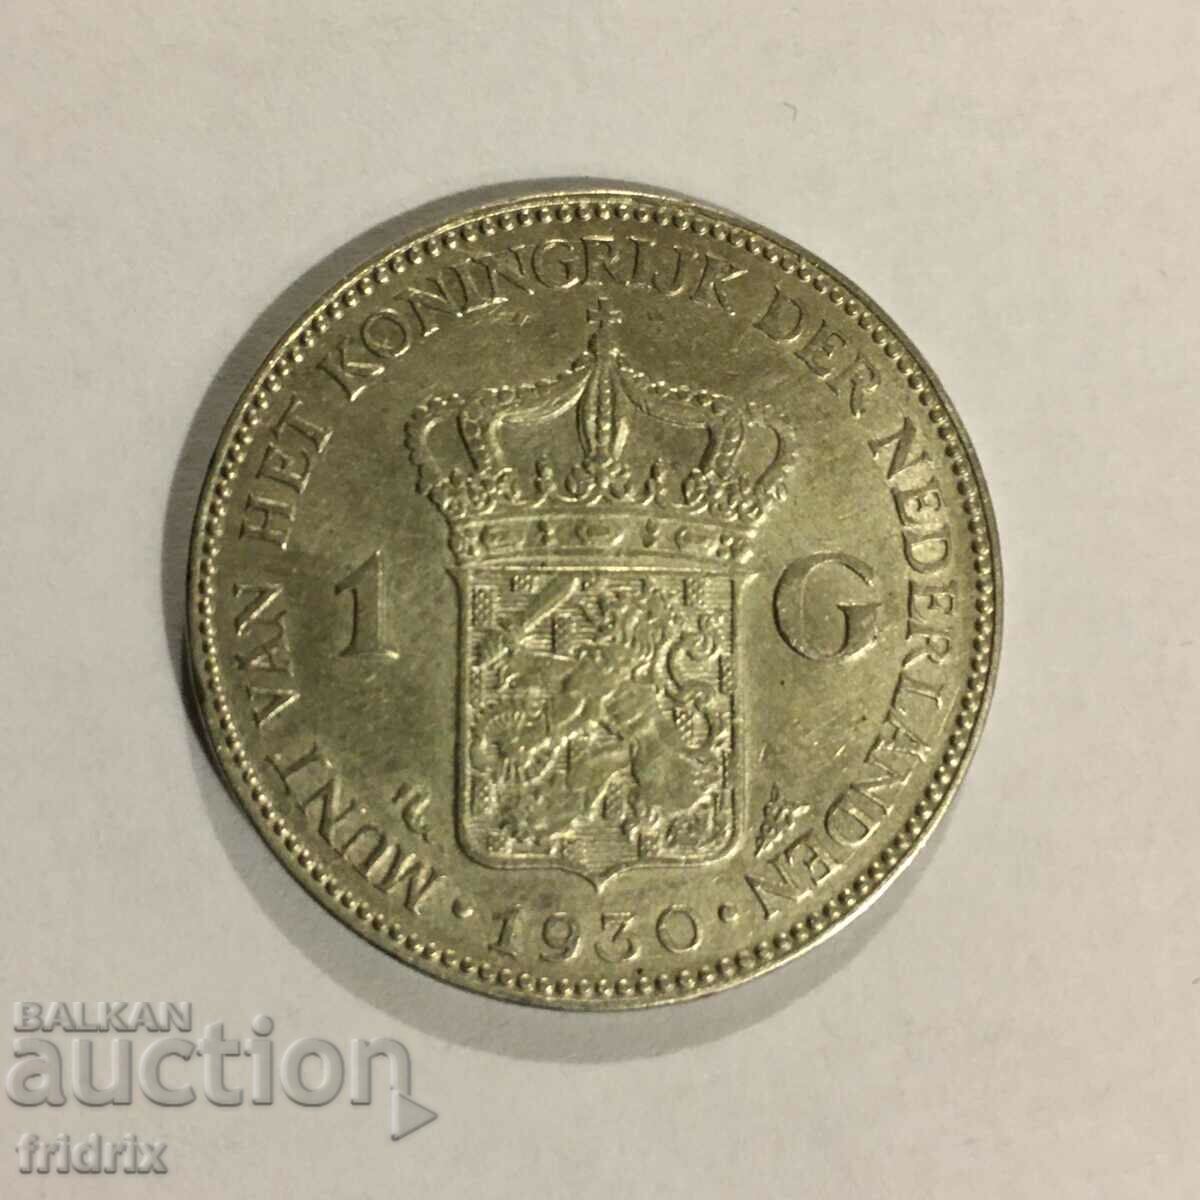 Netherlands 1 gulden 1930 / Netherlands 1 gulden 1930